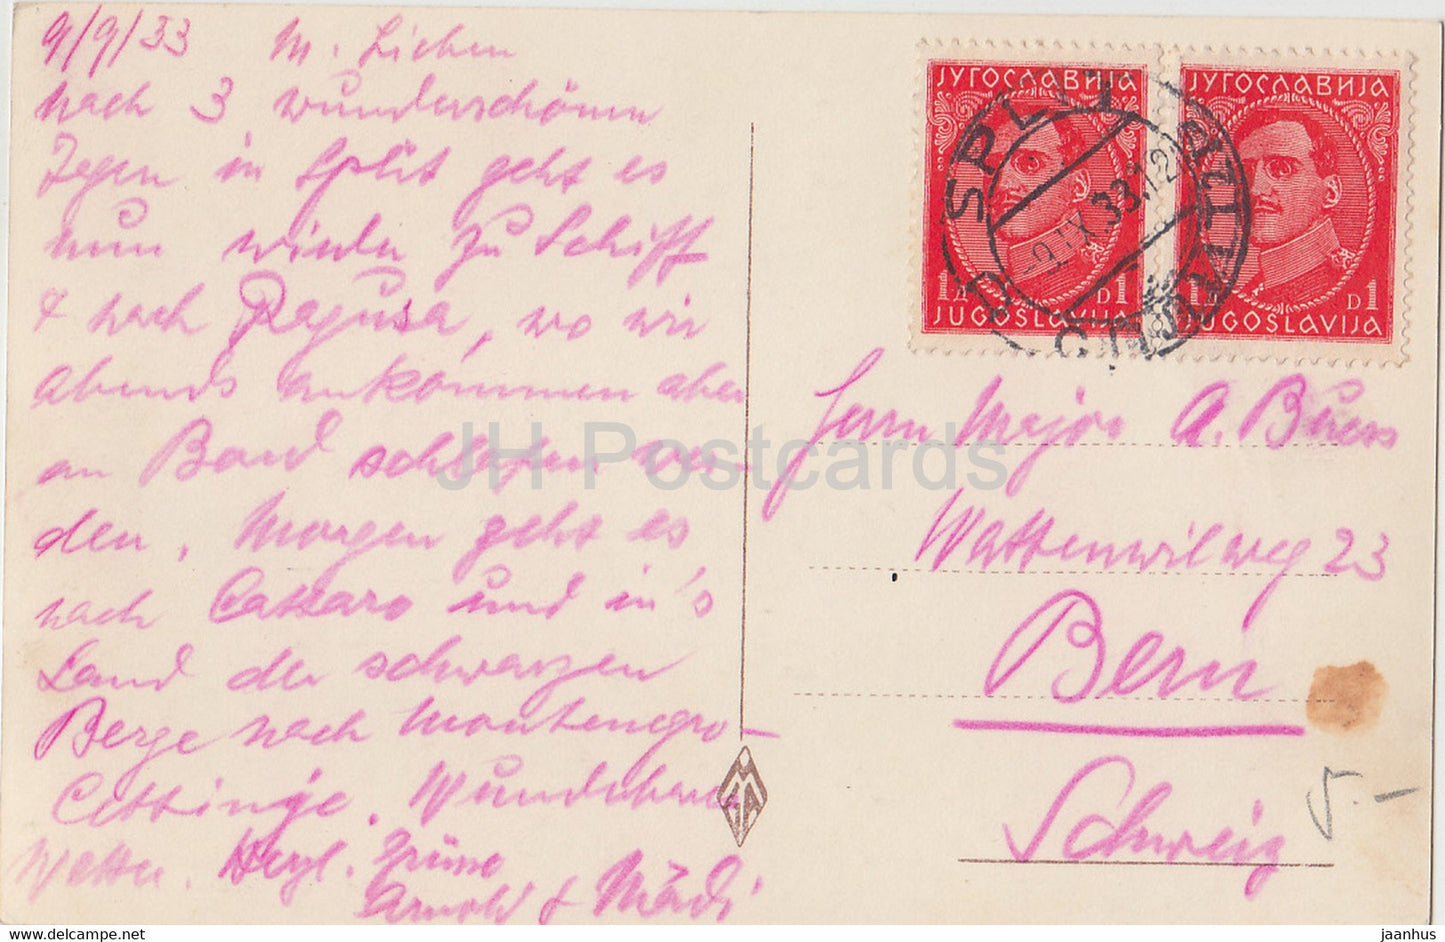 Split - Zvonik - Stolne crkve - beffroi - 10 - carte postale ancienne - 1933 - Yougoslavie - Croatie - utilisé